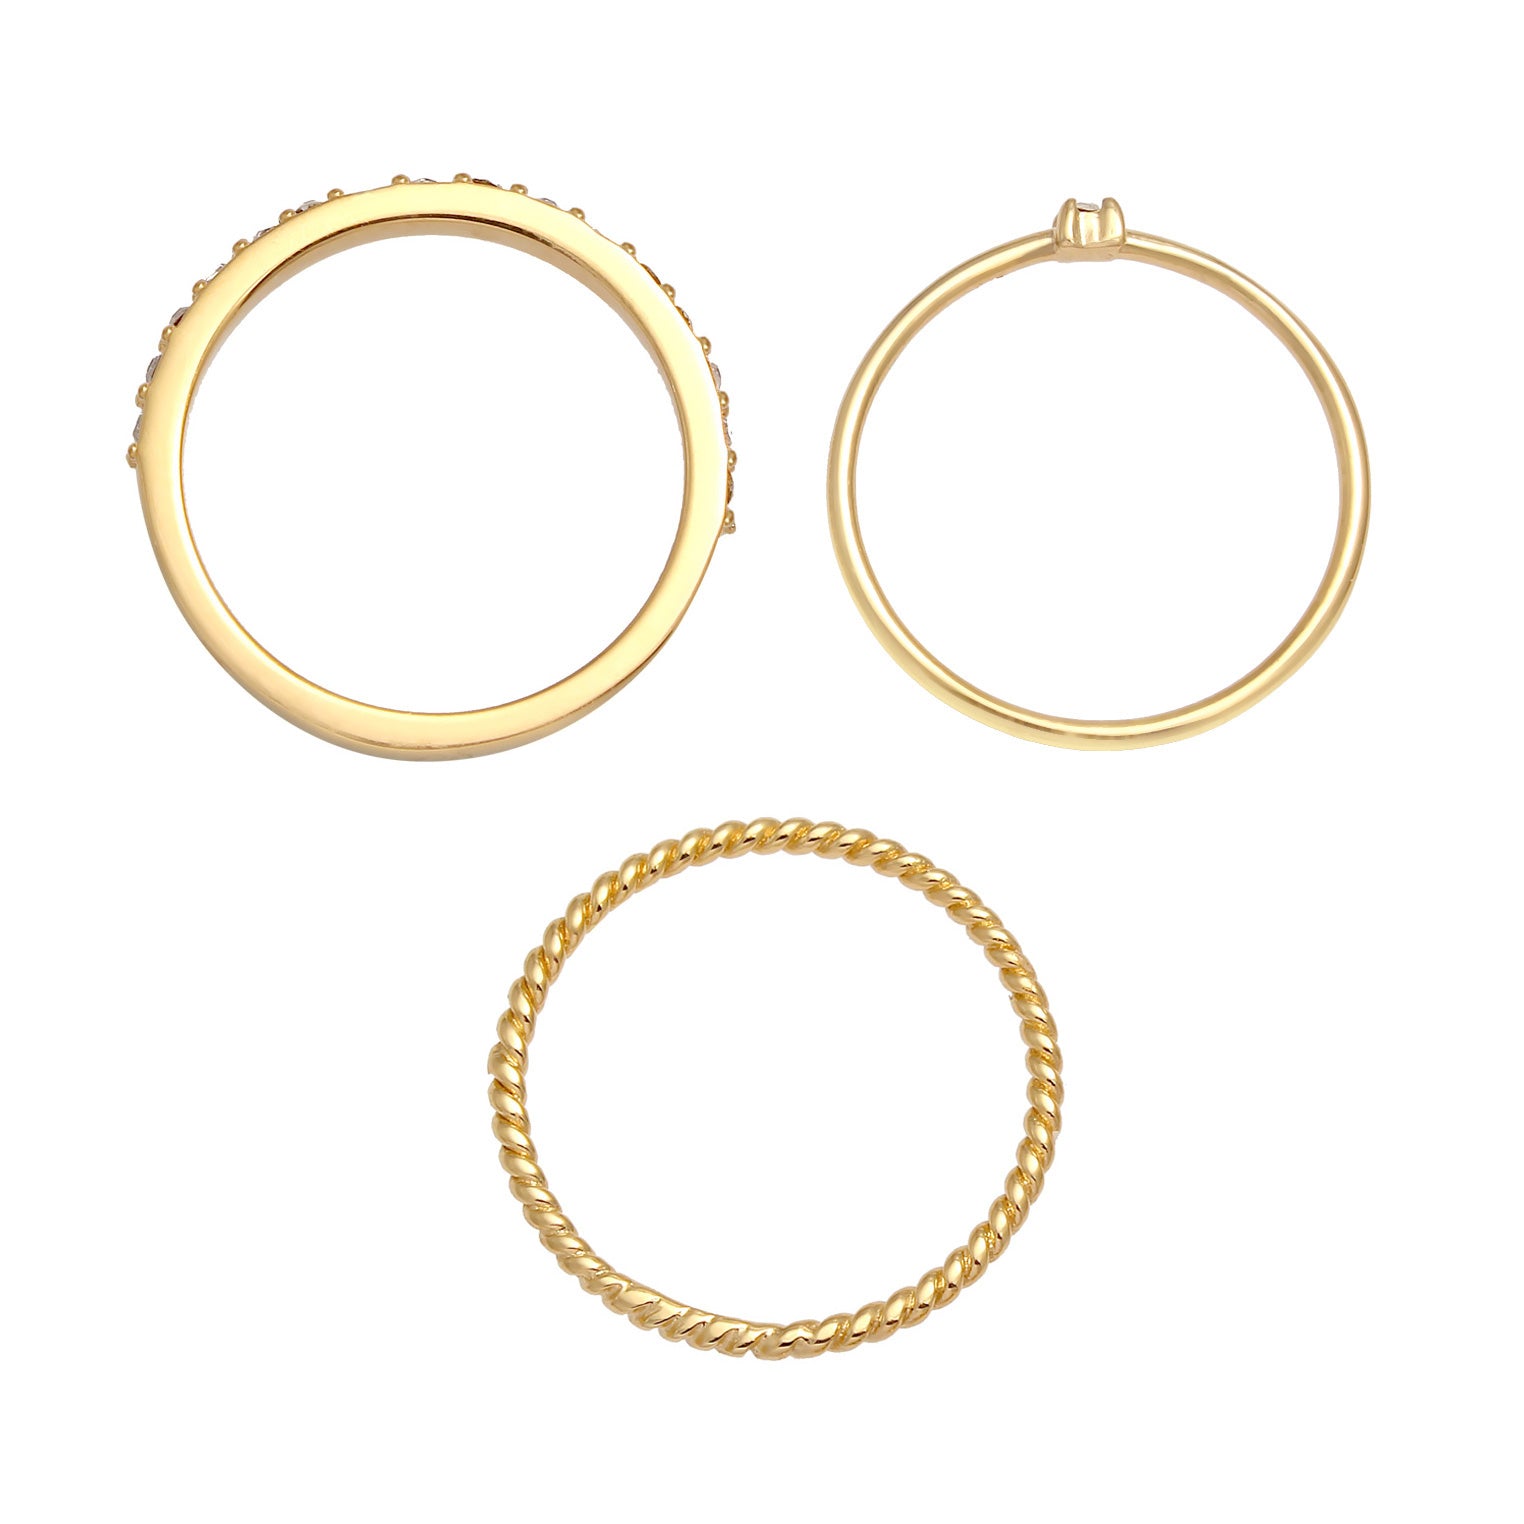 Gold - Elli | Ringset | Emaille, Kristall (weiß) | 925er Sterling Silber Vergoldet